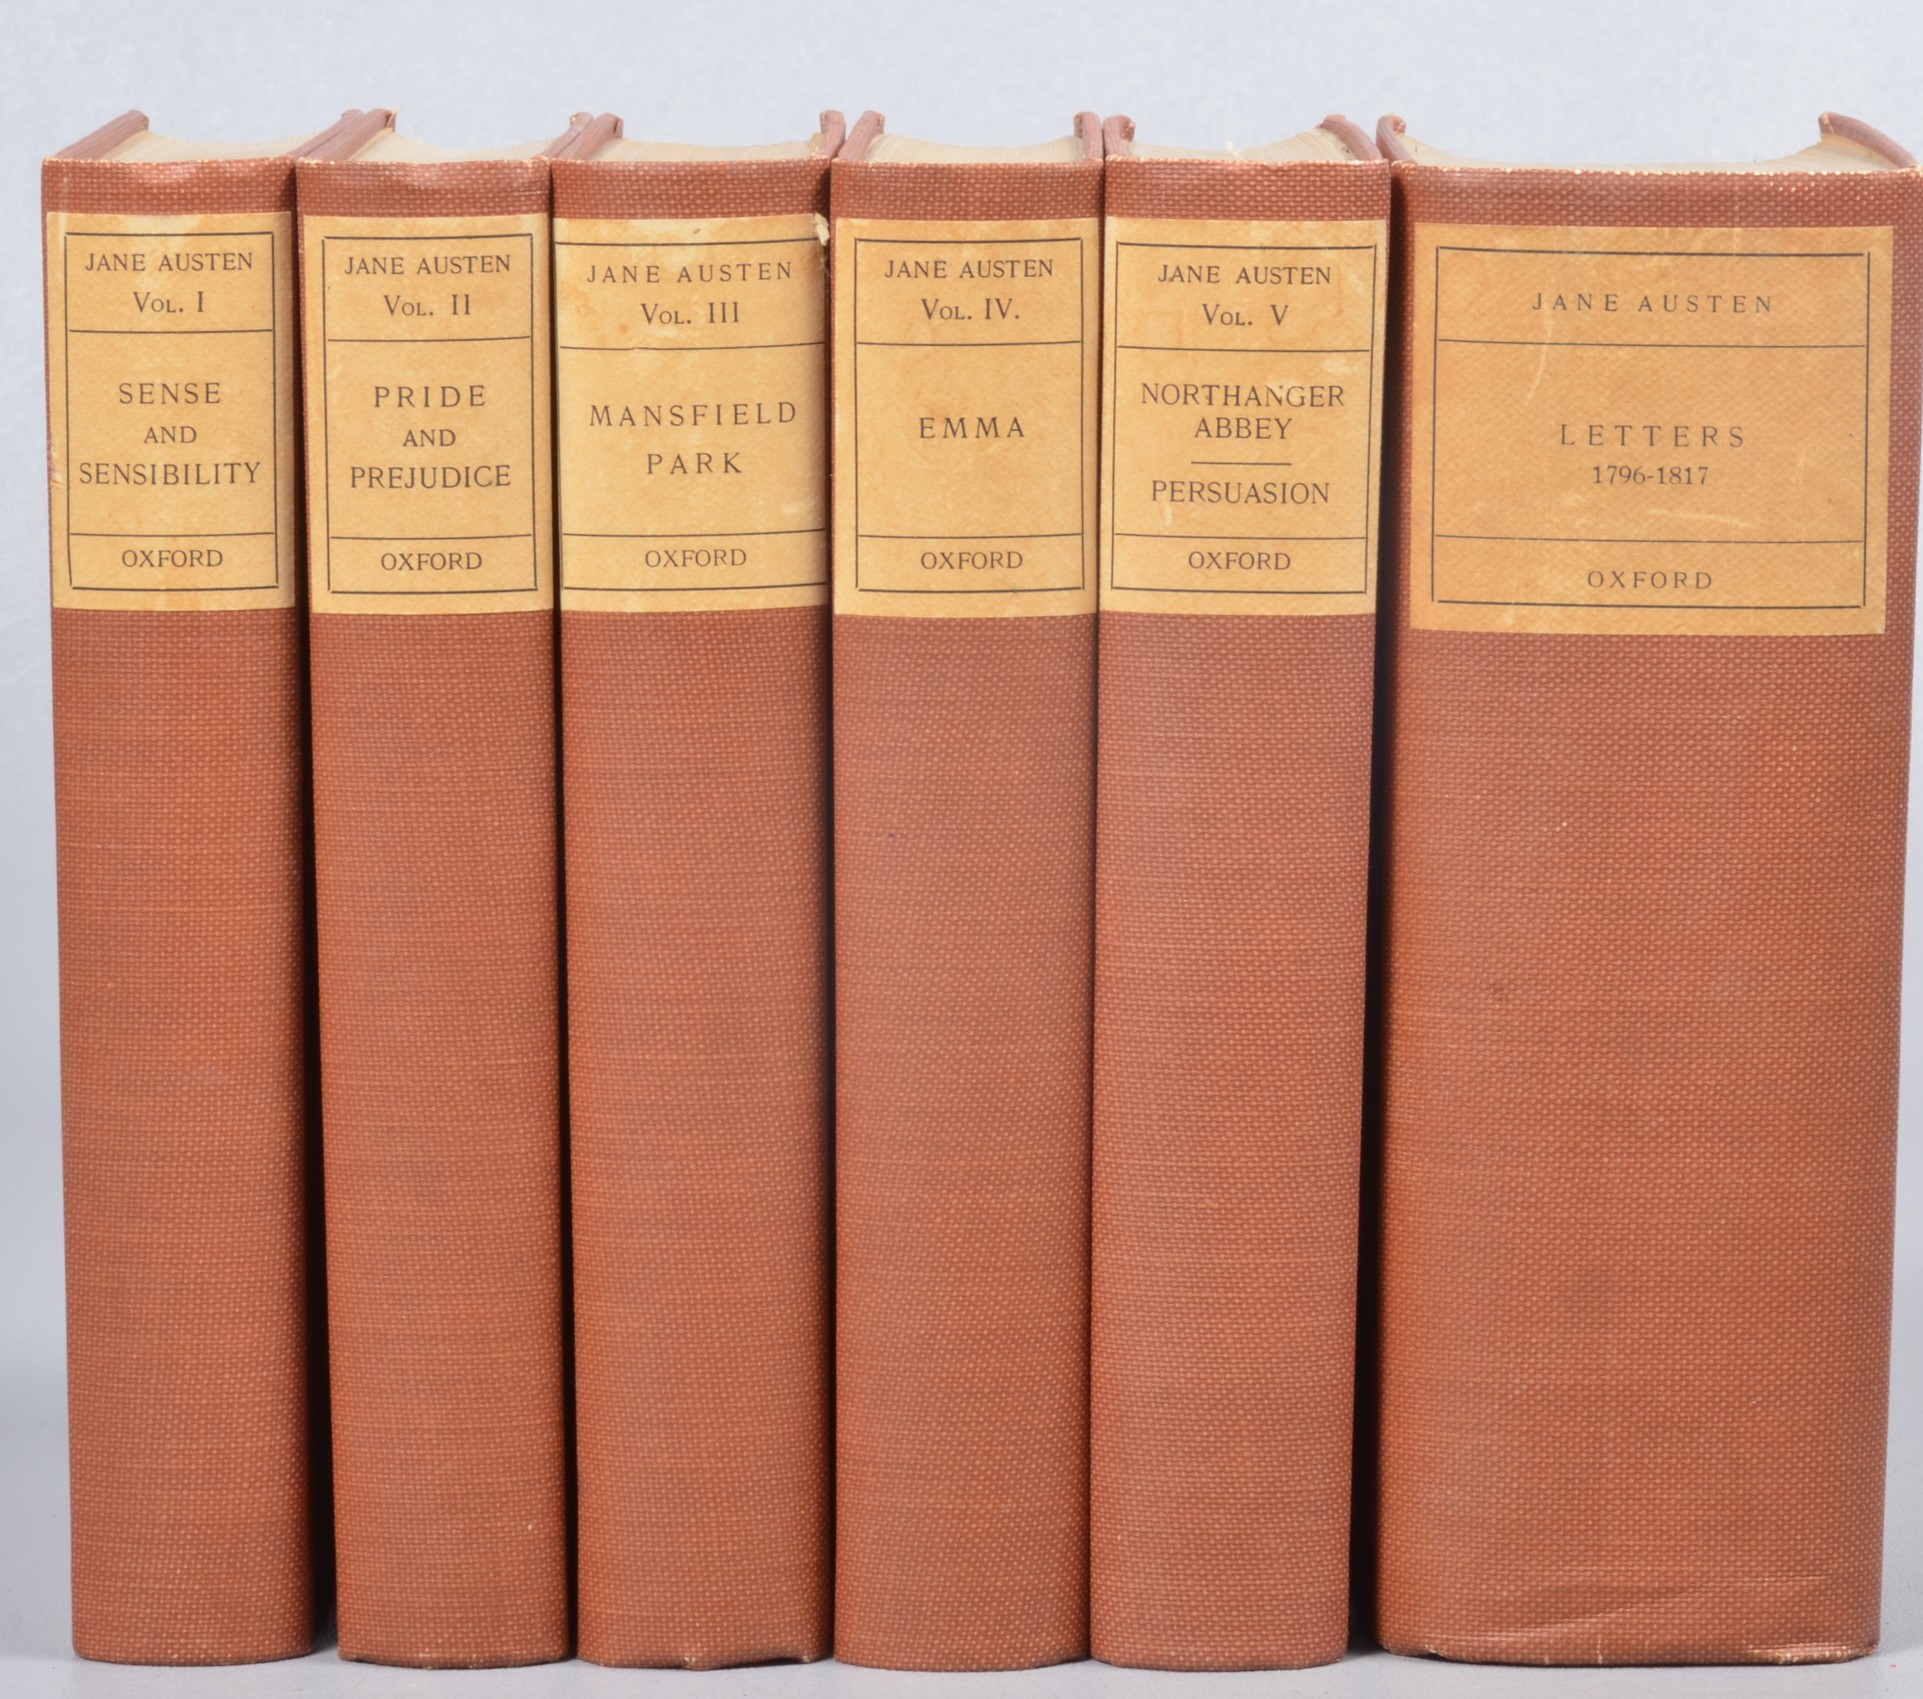 A five-volume set of the novels